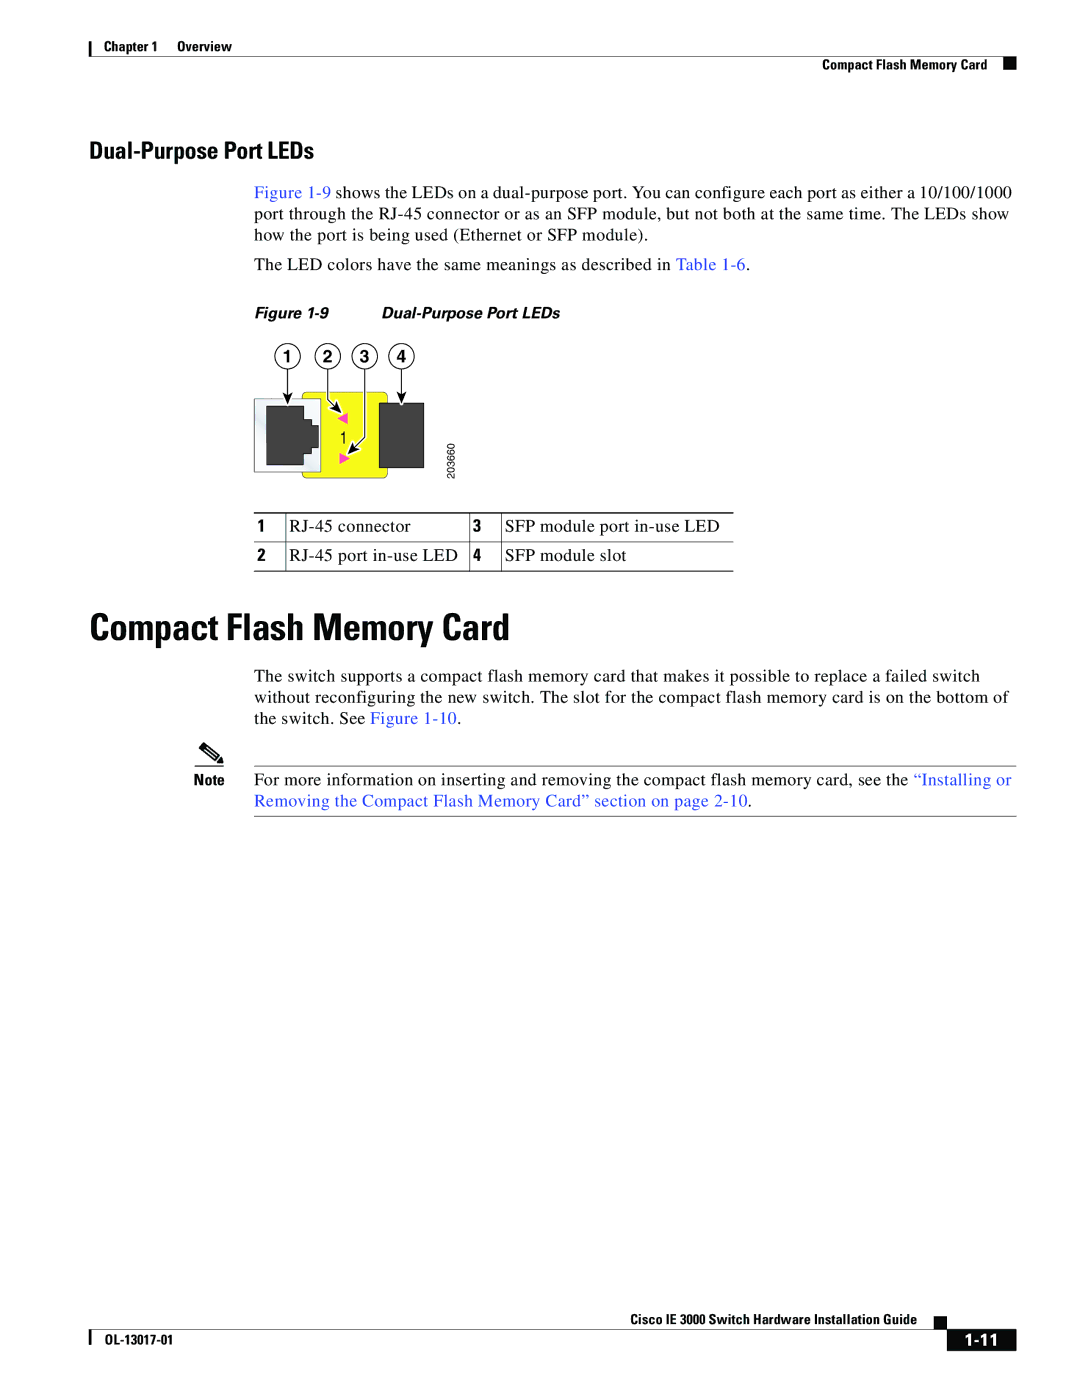 Cisco Systems IE 3000 Series, IEM30004PC manual Compact Flash Memory Card, Dual-Purpose Port LEDs 